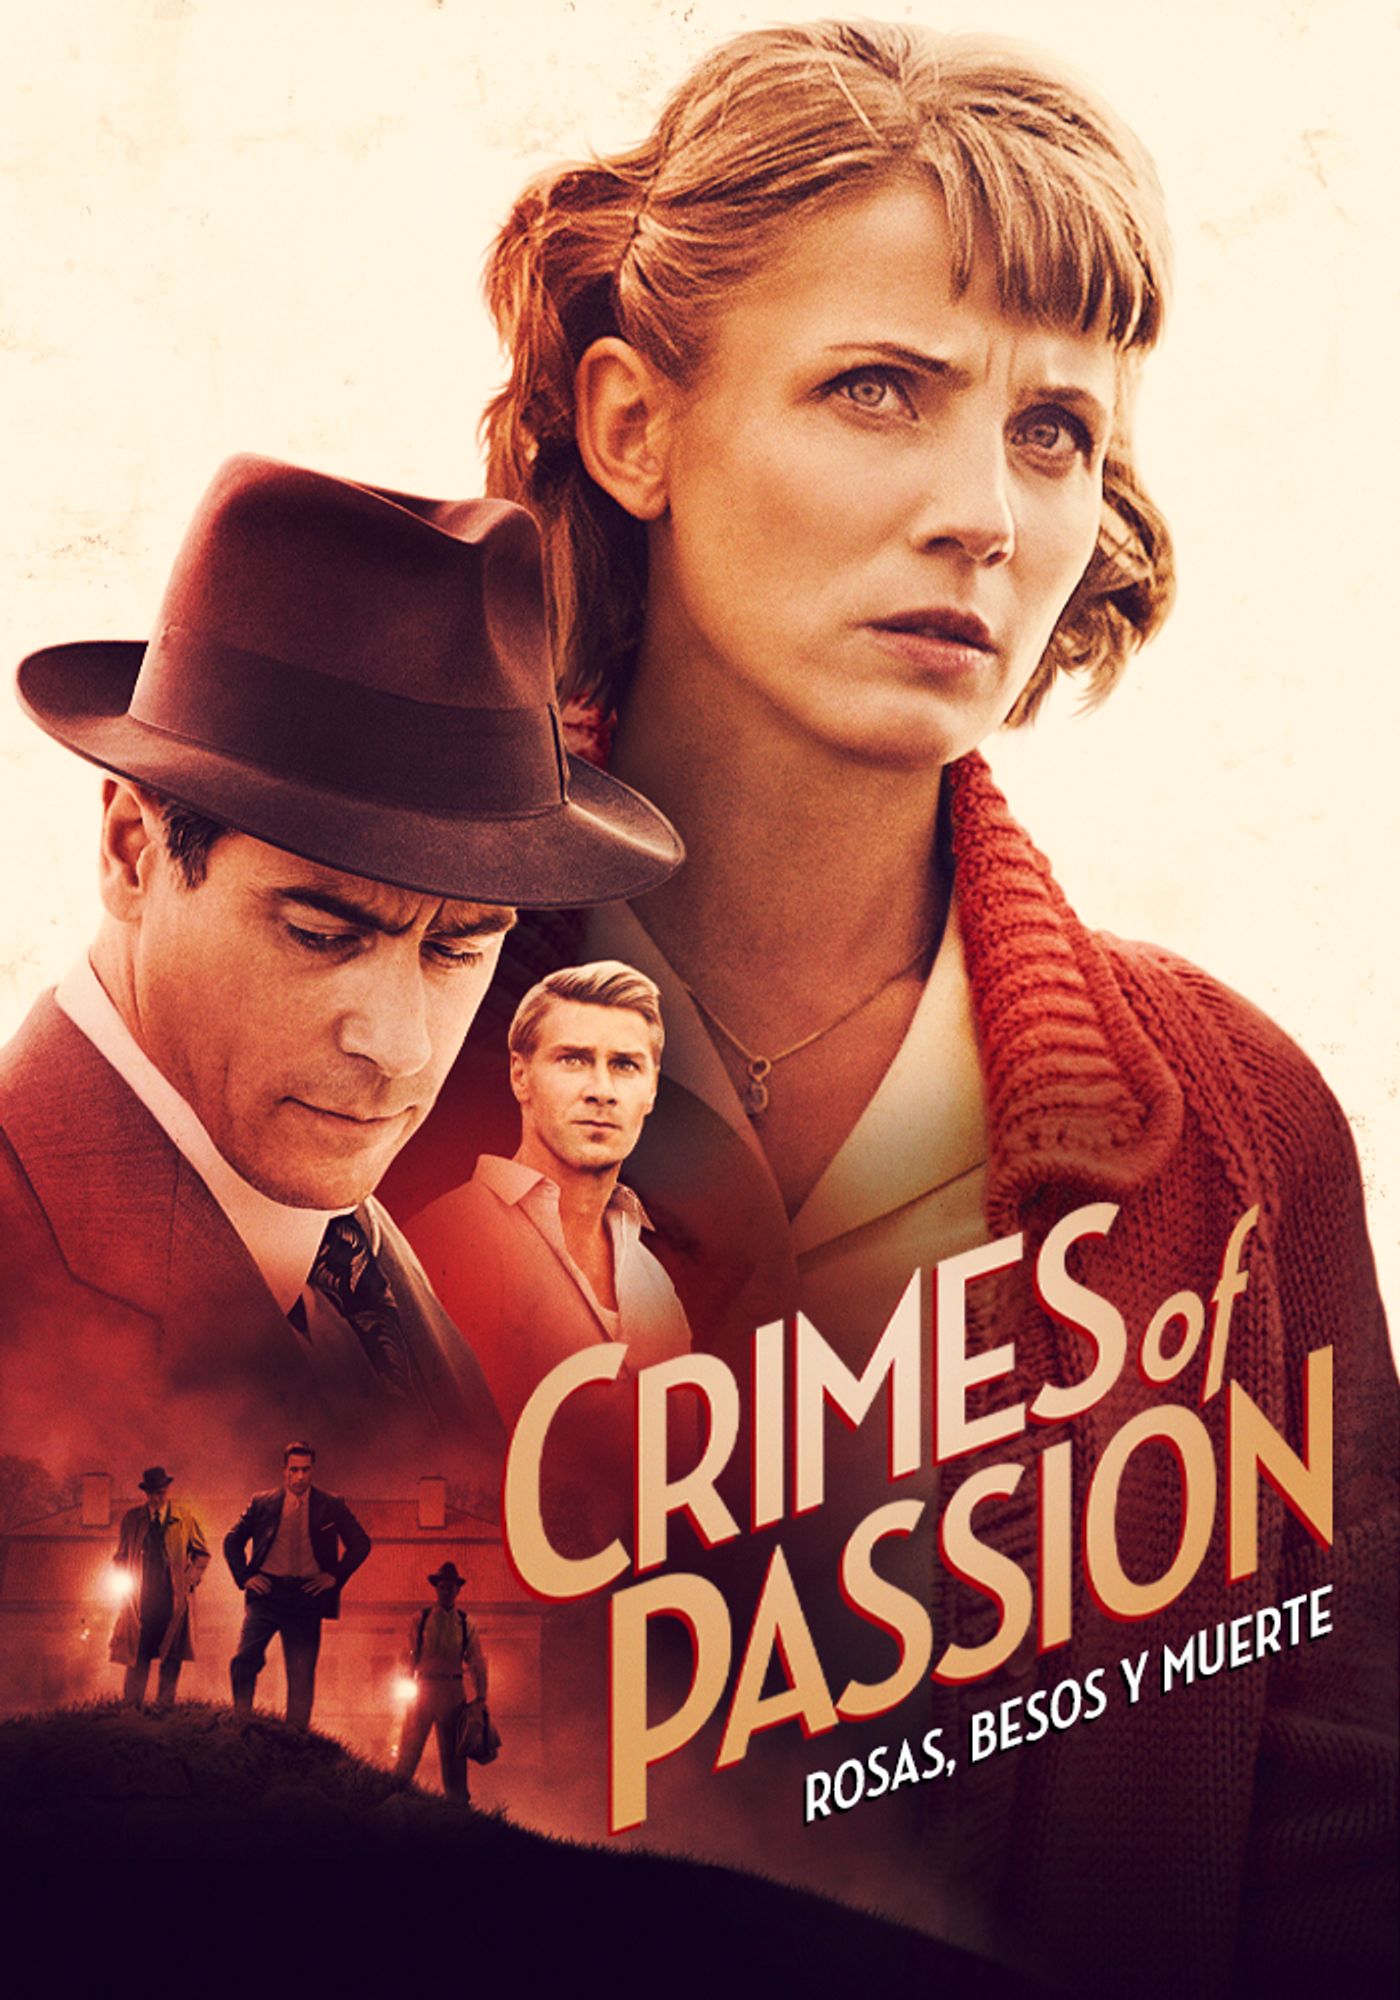 Crimes of Passion 4: Rosas, besos y muerte